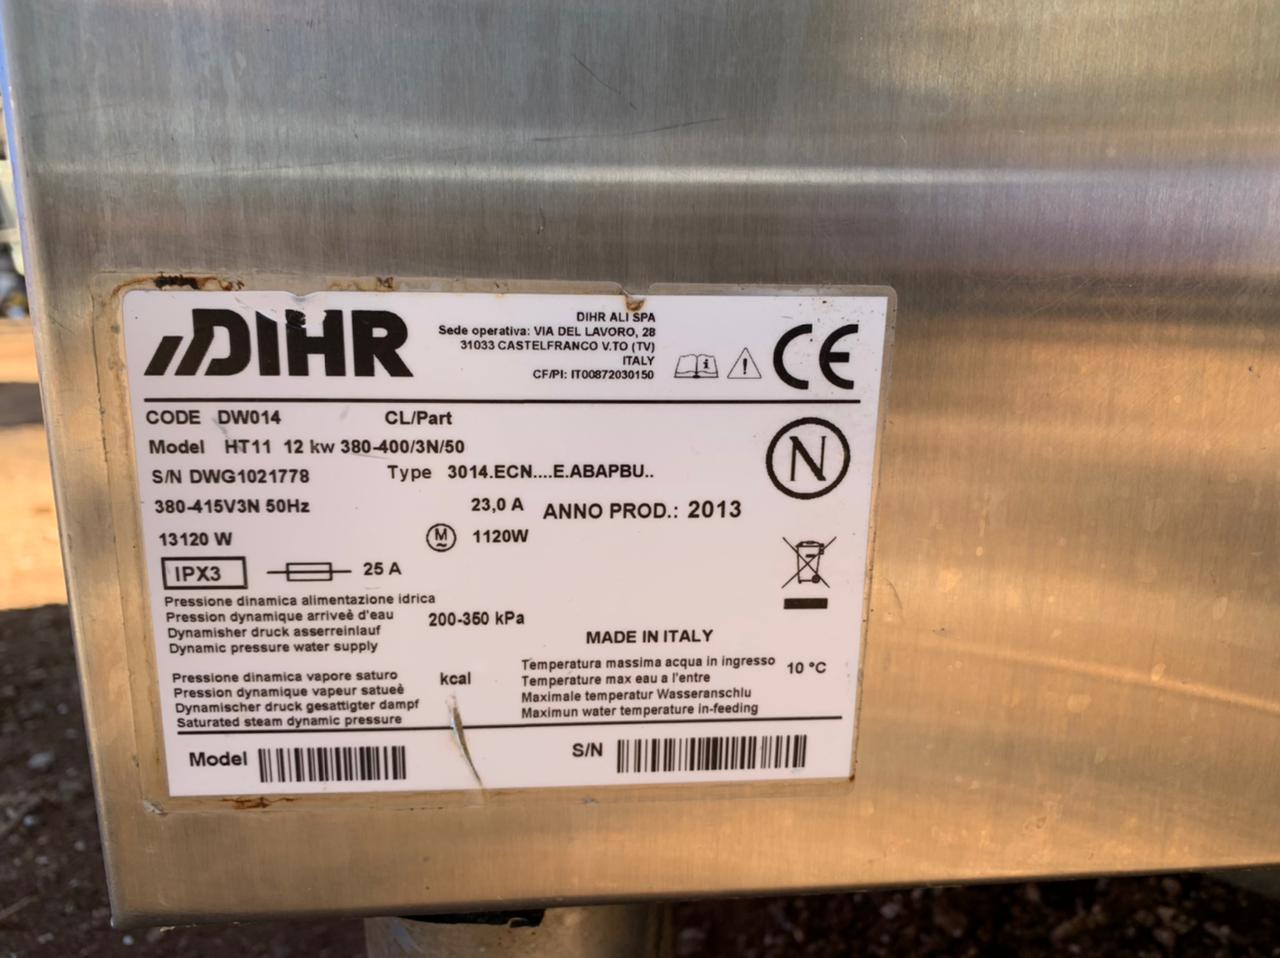 DIHR DW014 Stainless Steel Pass Through Hood Dishwasher 72cmW x 81cmD x 150cmH